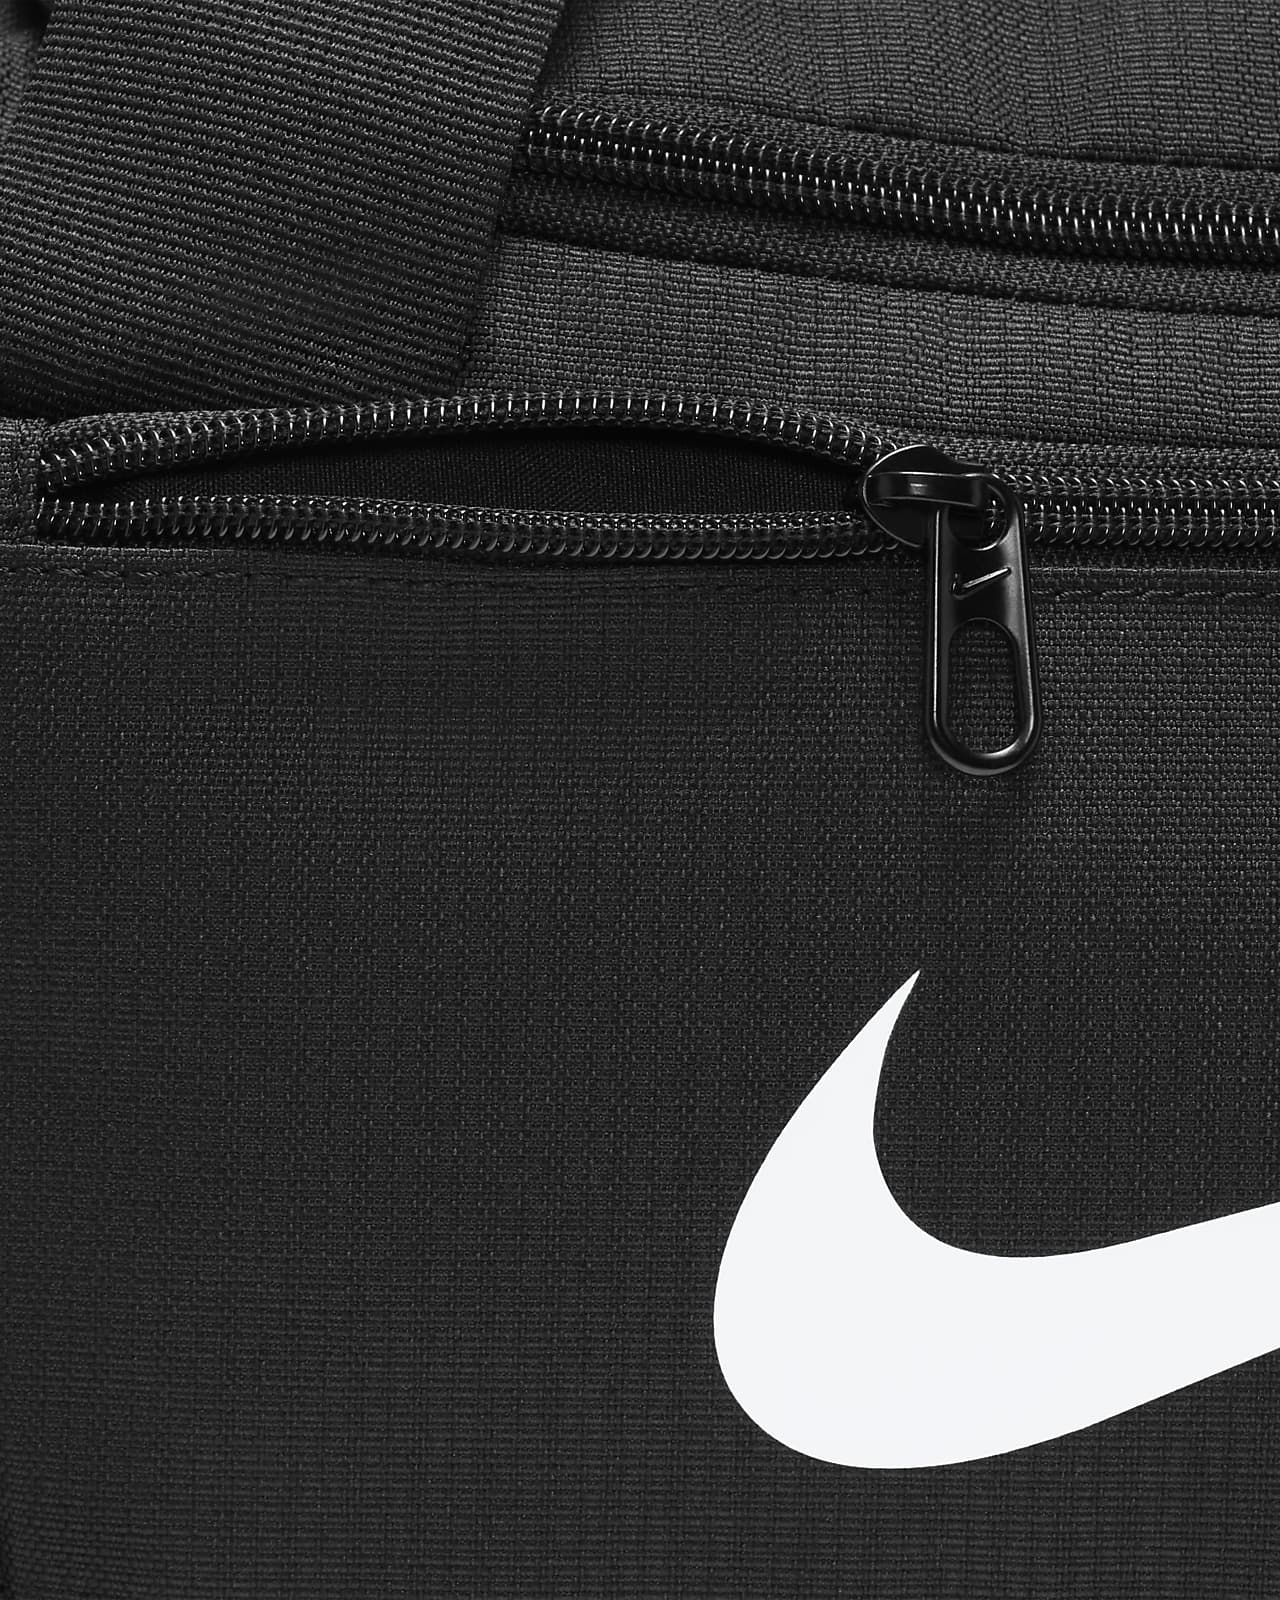 Nike Brasilia Extra Small Duffel Bag in Blue